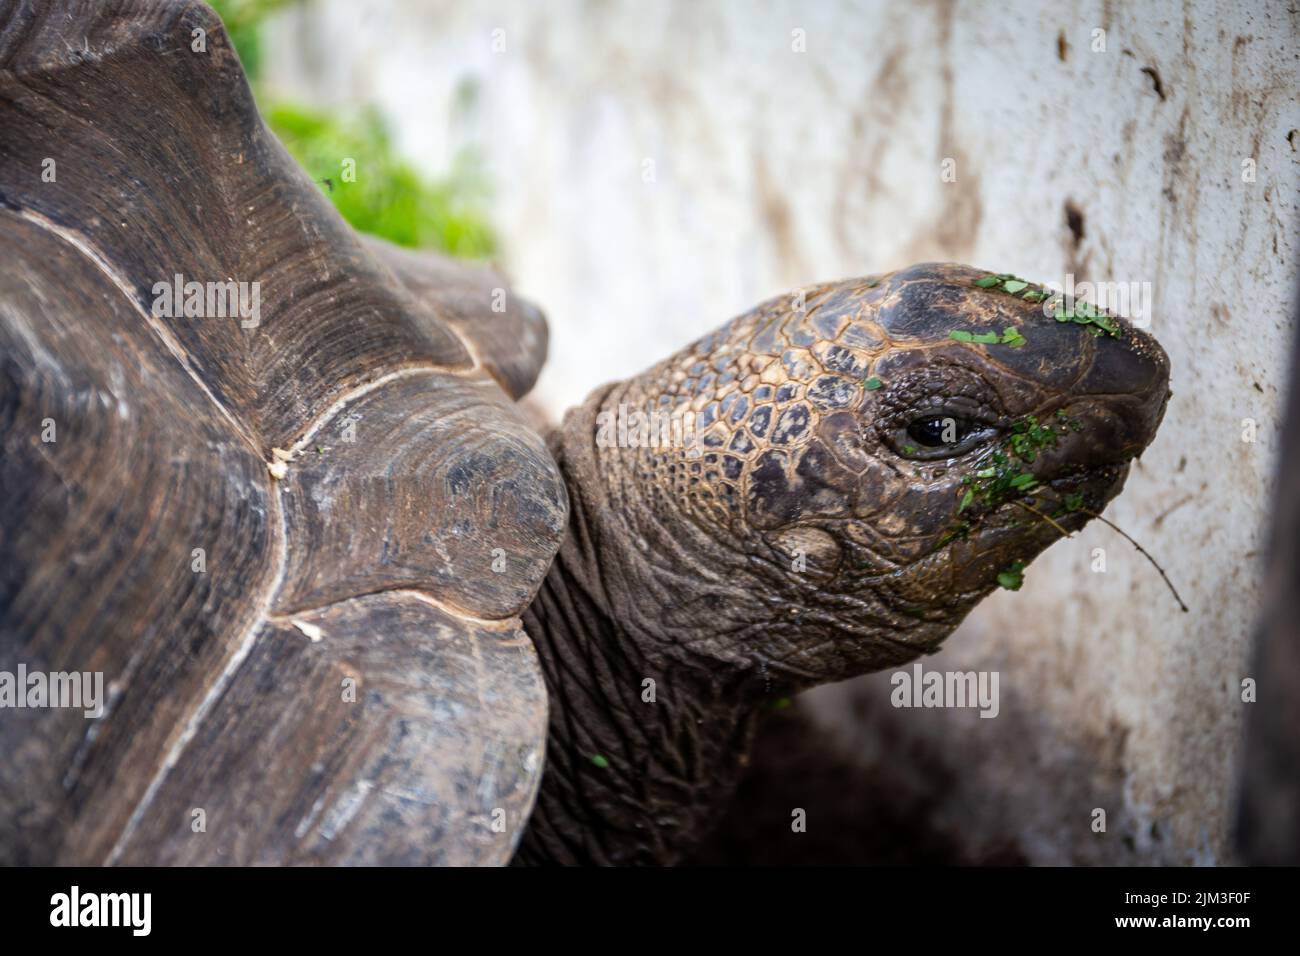 The Aldabra giant tortoise (Aldabrachelys gigantea), endemic to Seychelles, close-up view. Stock Photo